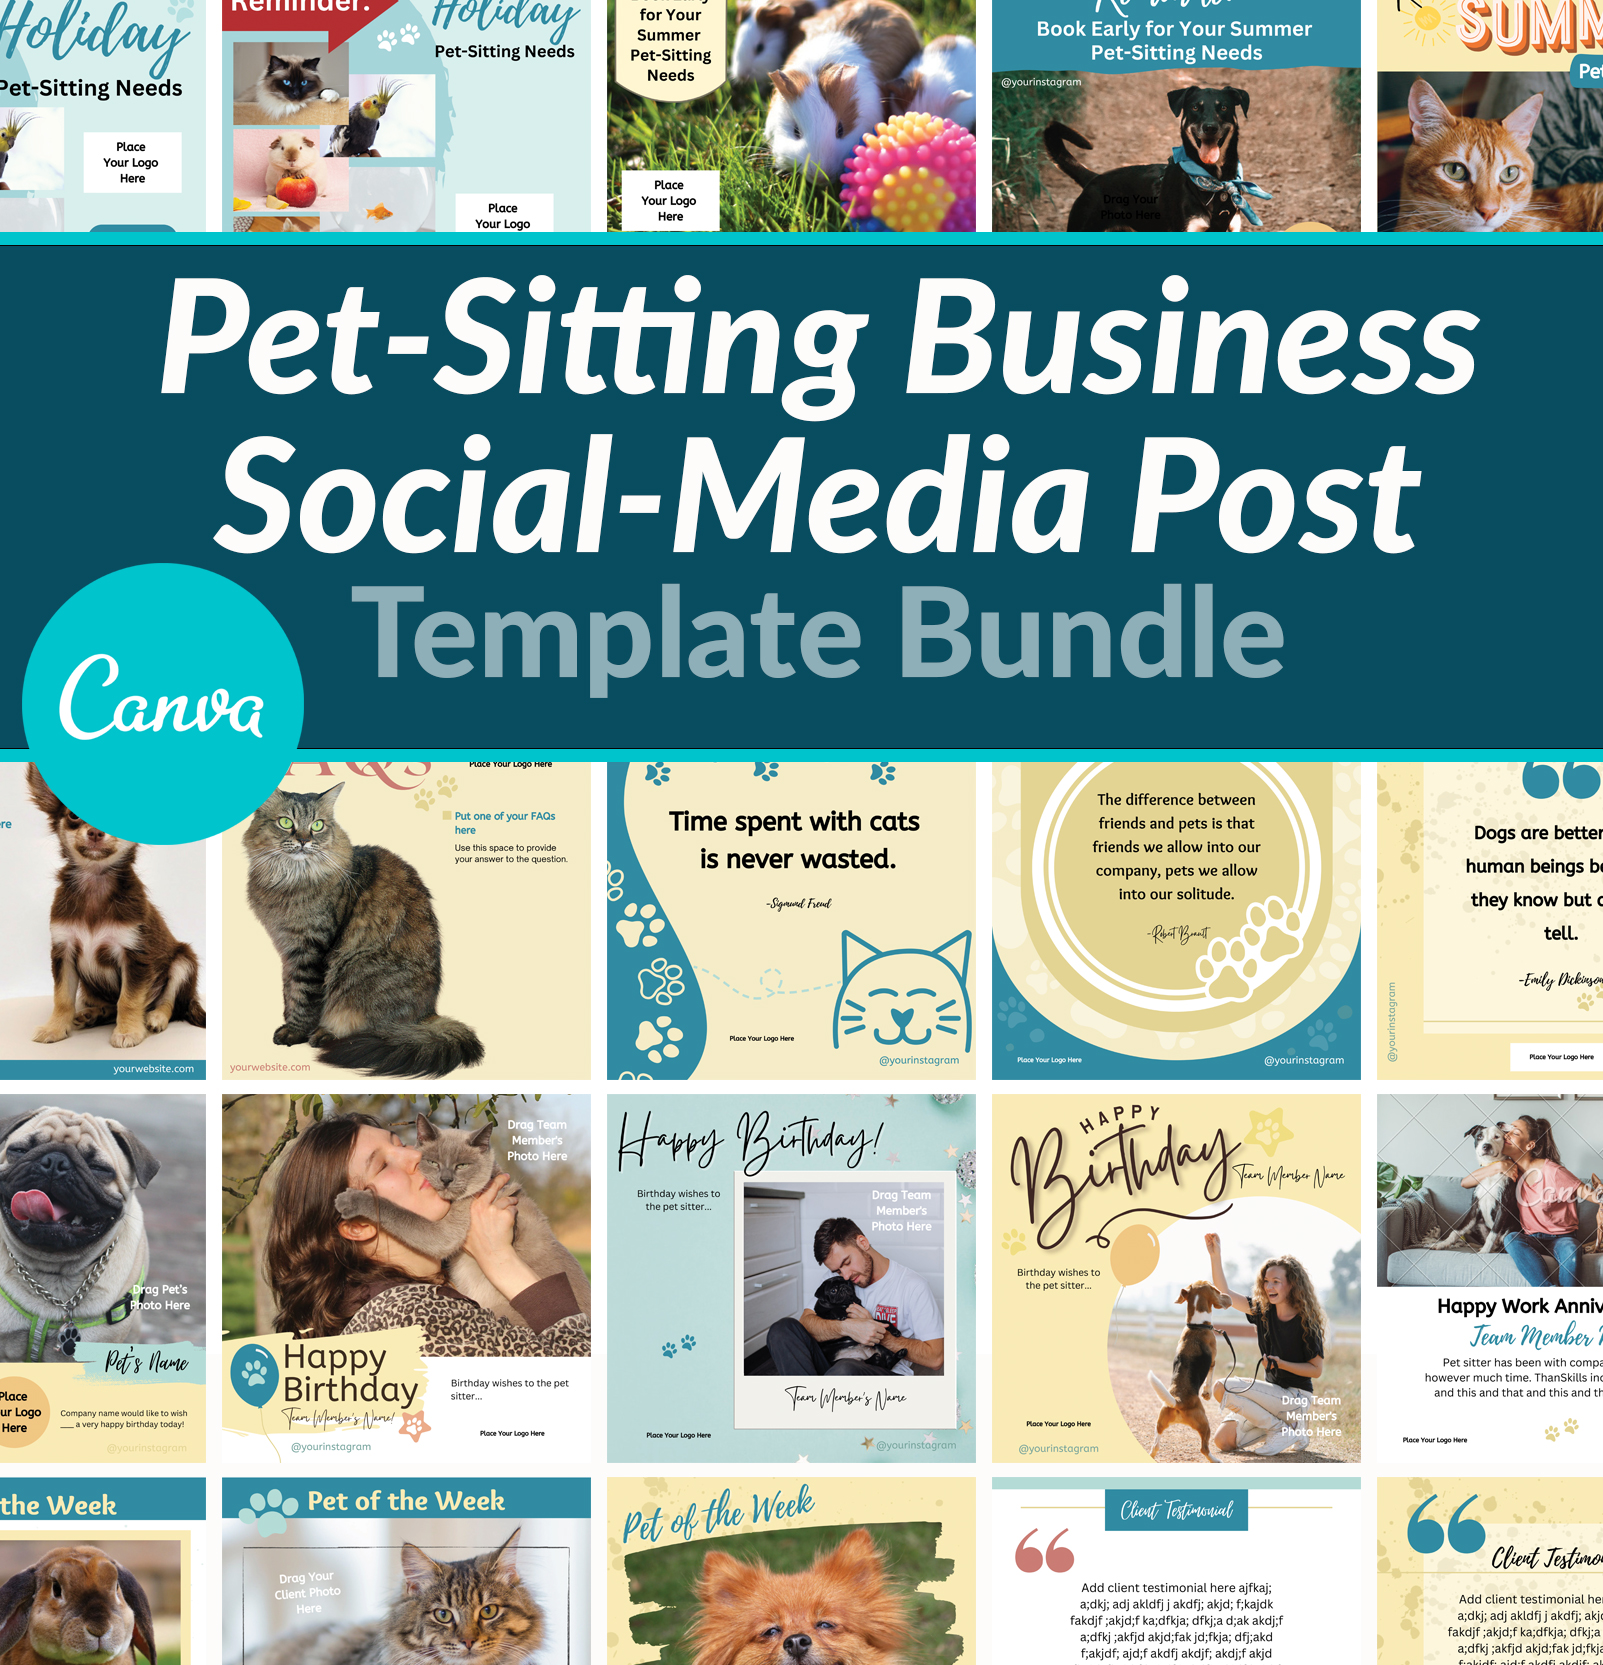 Pet-Sitting Business Social-Media Post Template Bundle